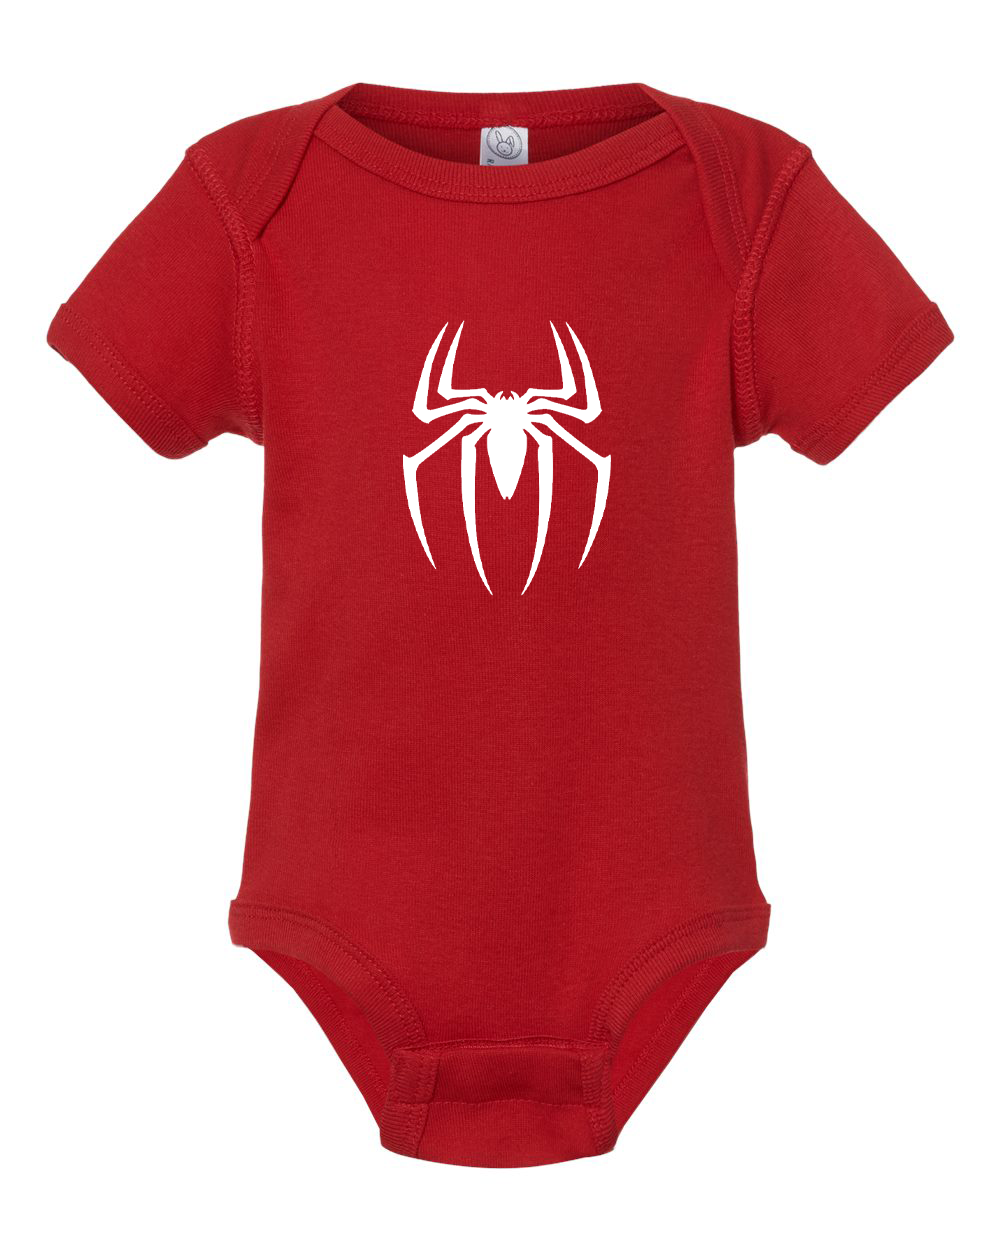 Spiderman Marvel Avengers Superhero Baby Romper Onesie